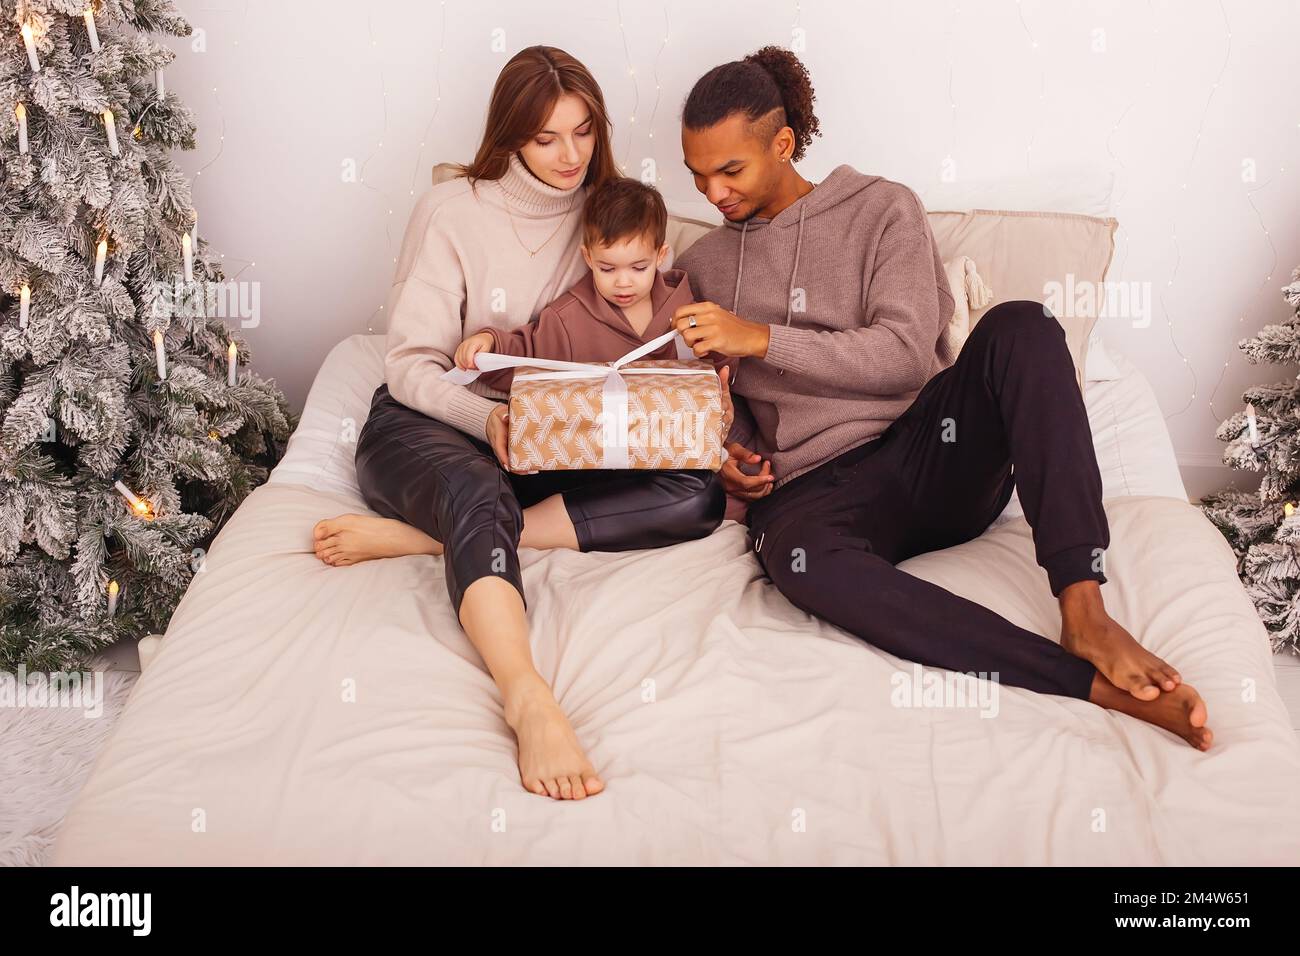 Una famiglia stilysh sta sedendosi su un letto, in un interno di Natale, slegando un nastro su una scatola marrone del regalo Foto Stock